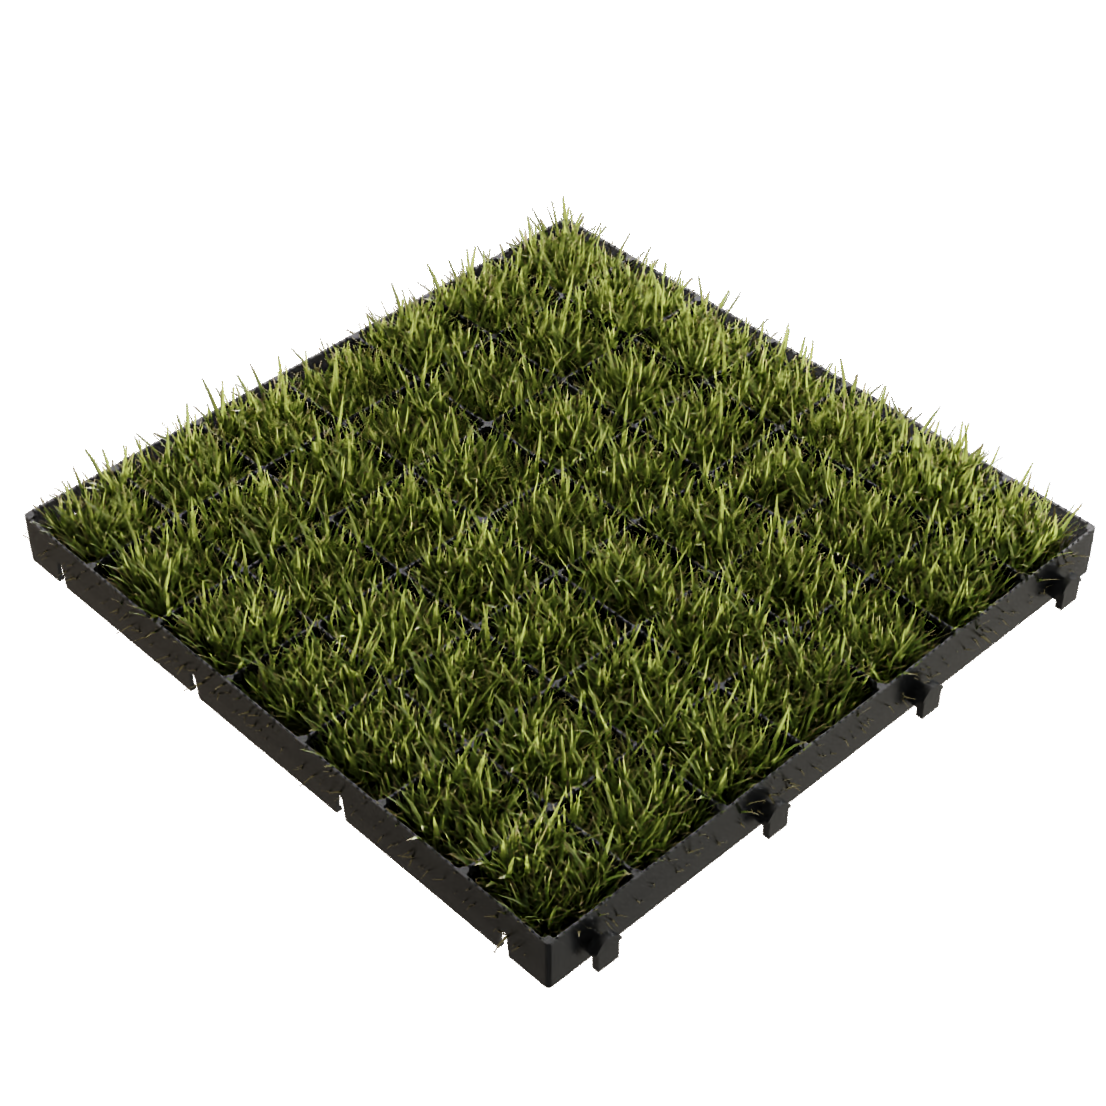 Grass pavers